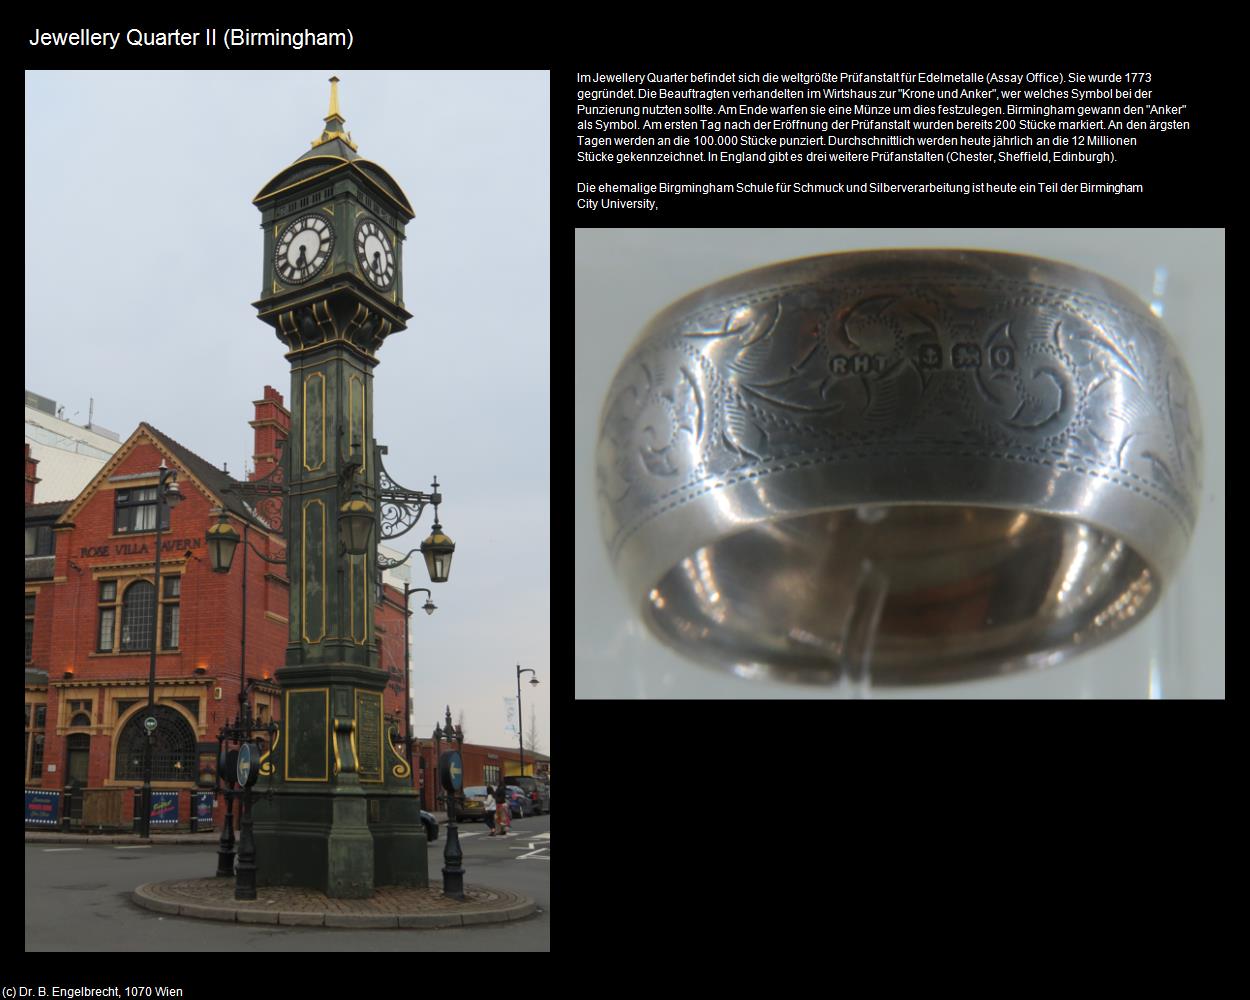 Jewellery Quarter II (Birmingham, England) in Kulturatlas-ENGLAND und WALES